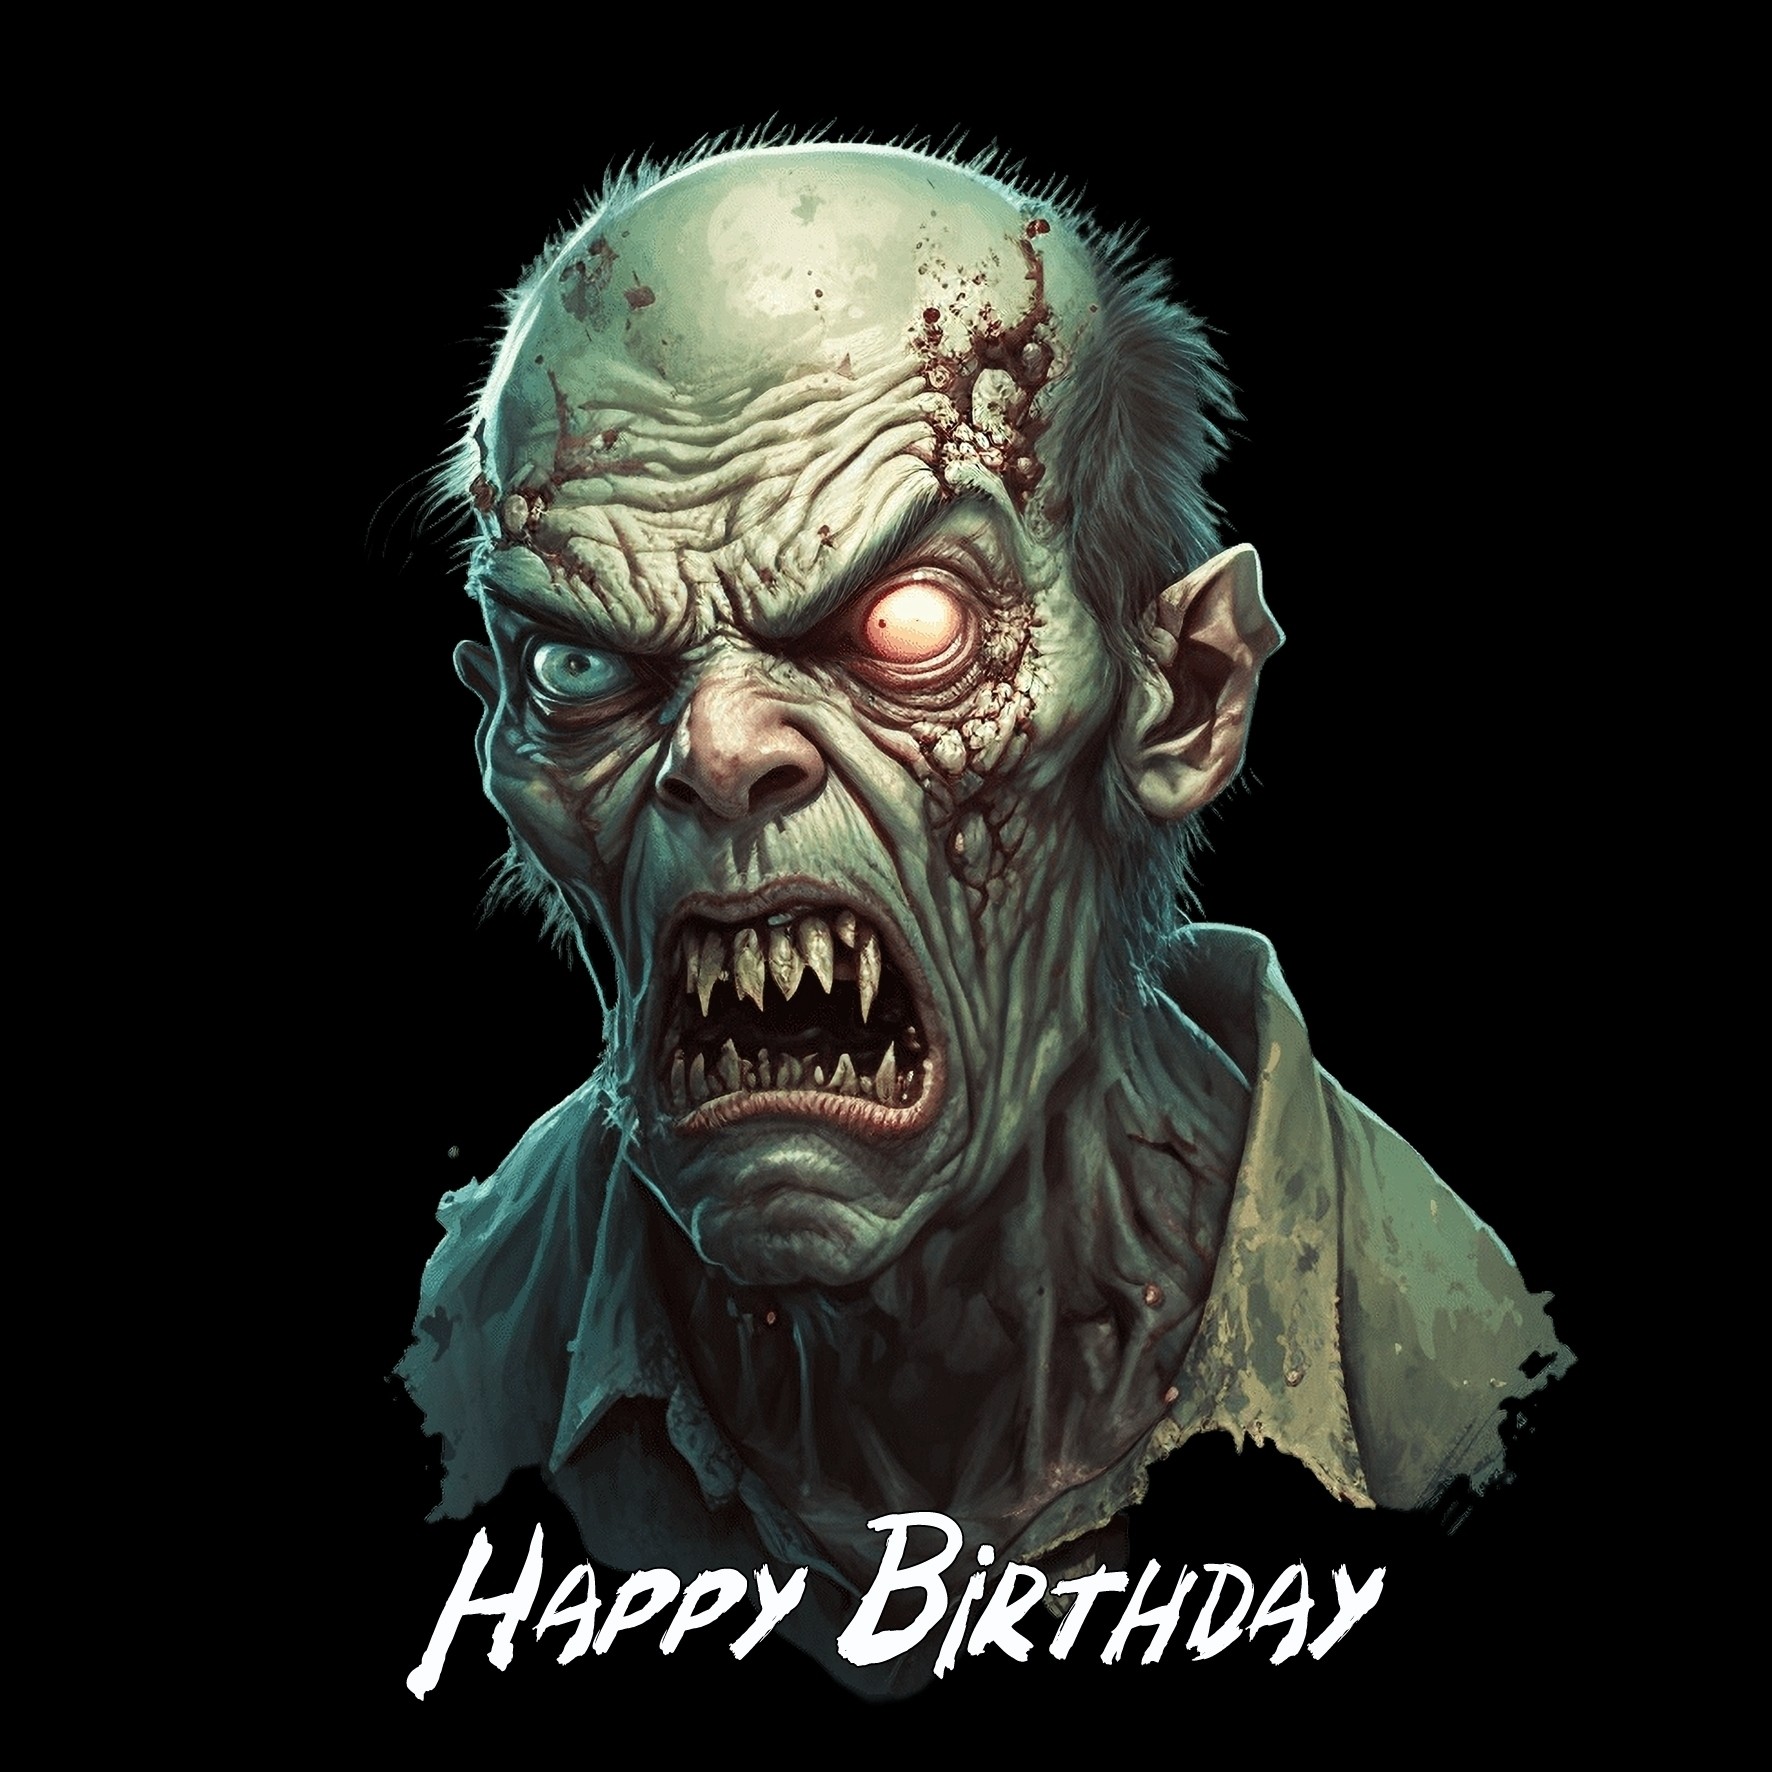 Fantasy Zombie Art Square Birthday Card Design 1